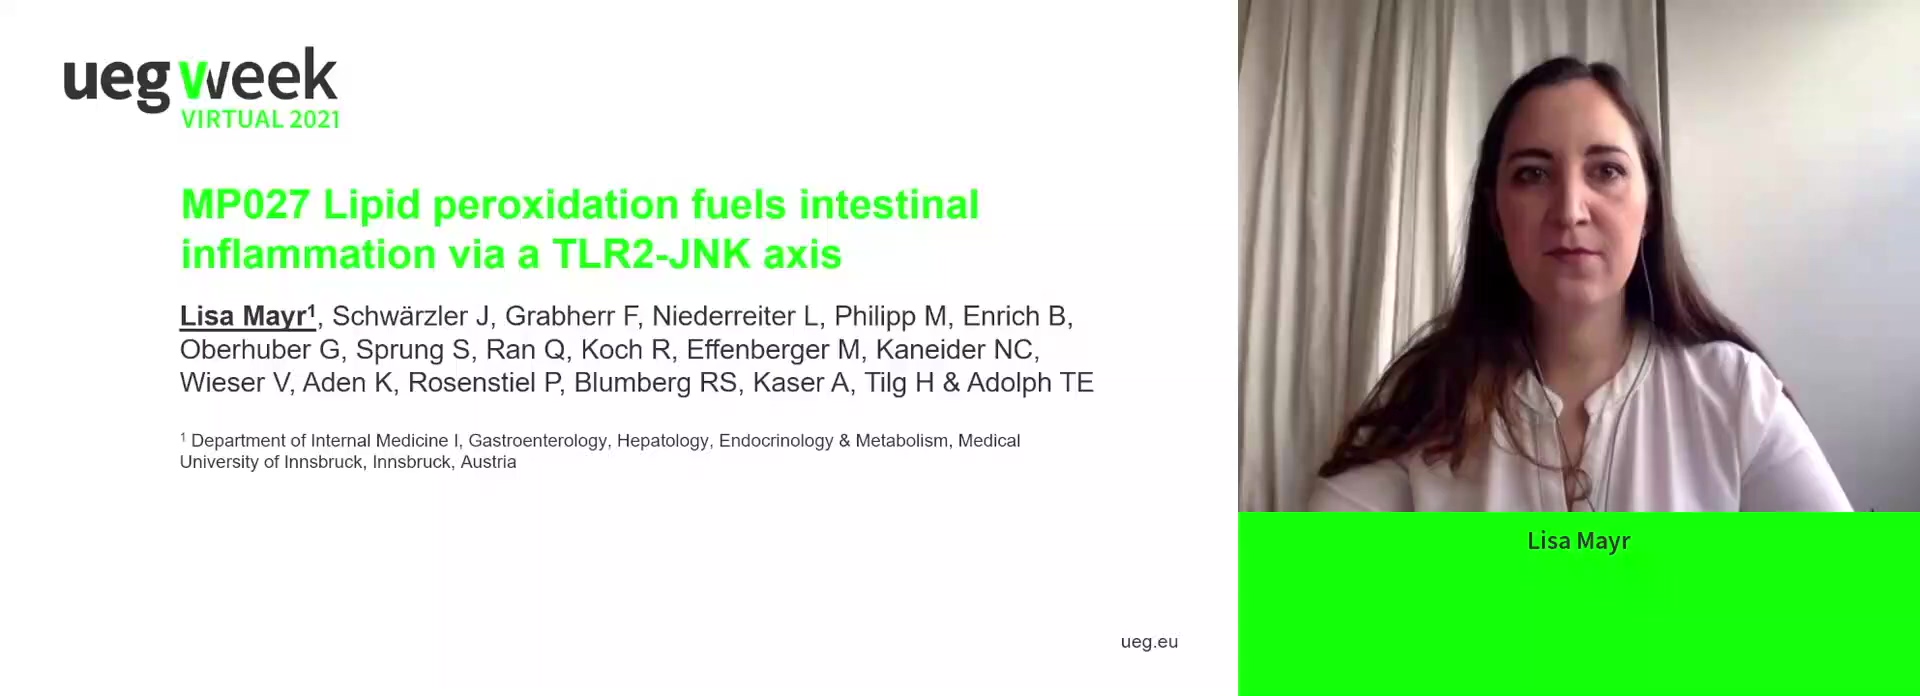 LIPID PEROXIDATION FUELS INTESTINAL INFLAMMATION VIA A TLR2-JNK AXIS